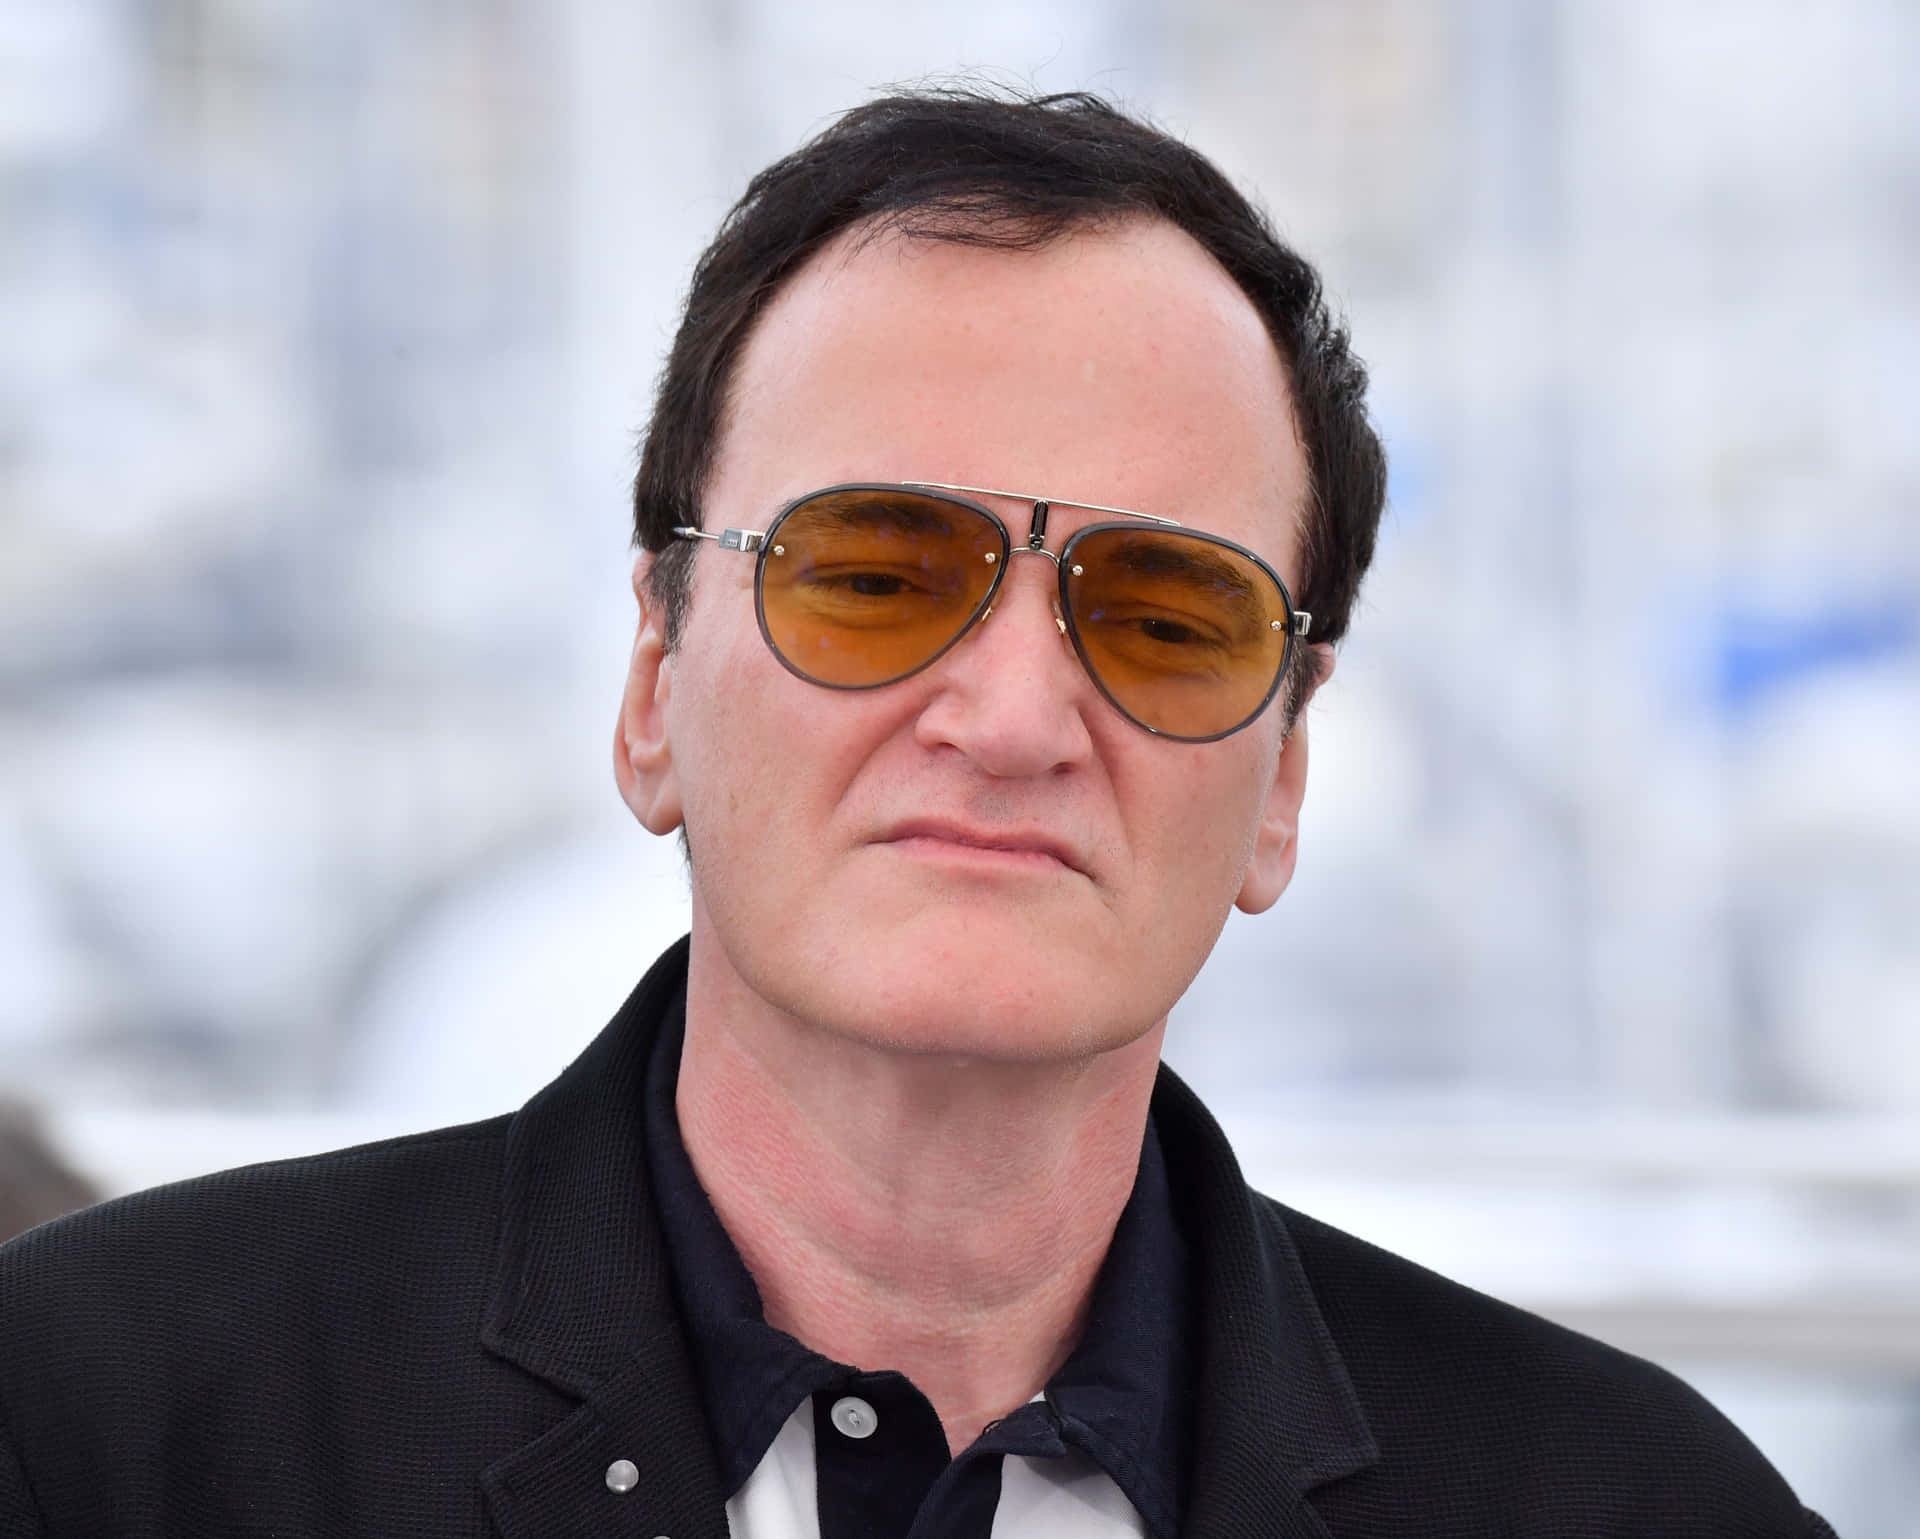 Quentin Tarantino Sunglasses Portrait Background